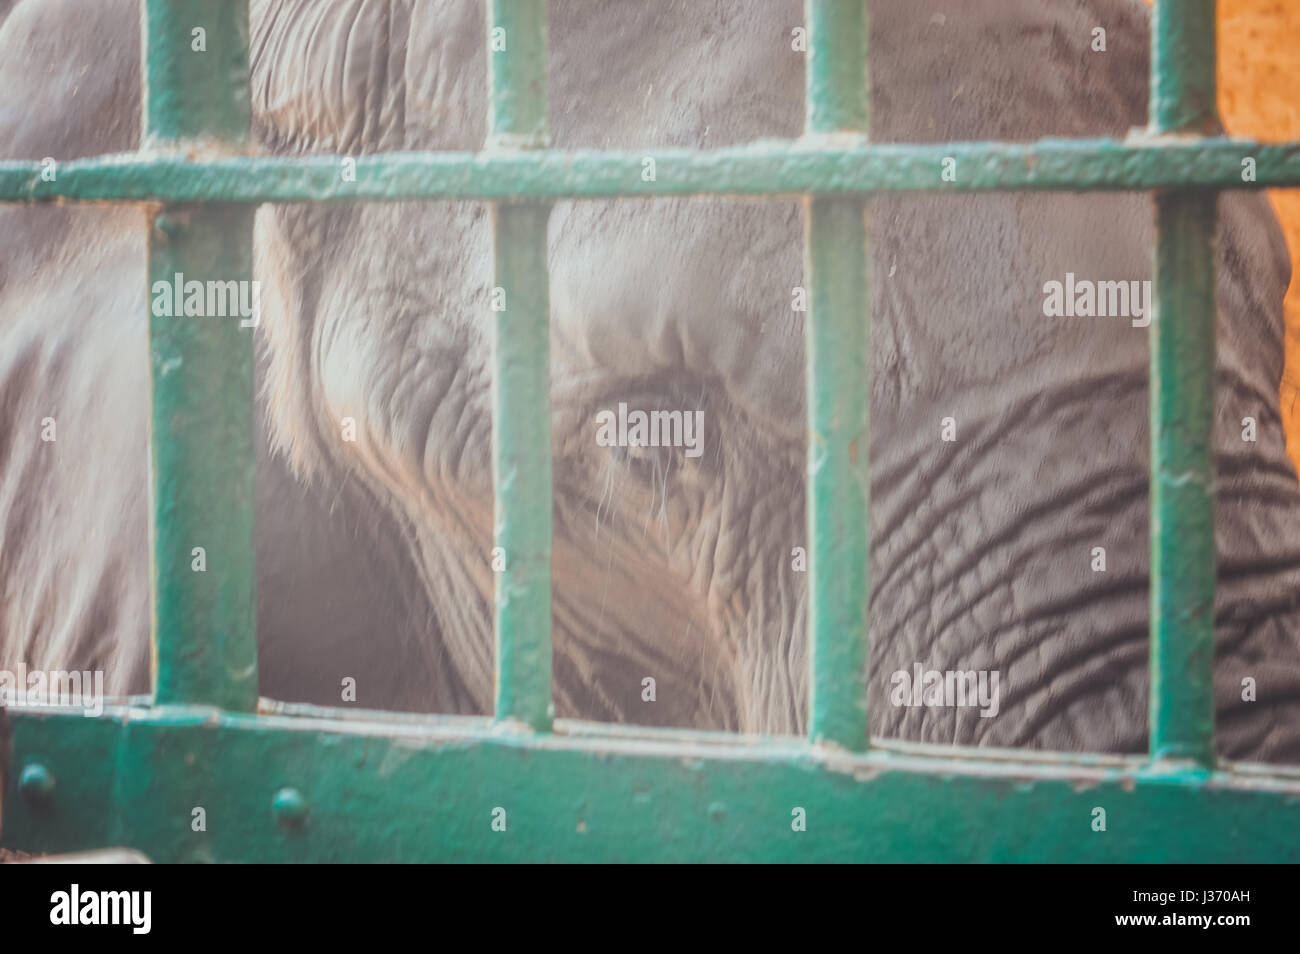 giza, egypt, march 4, 2017: closeup of eye of sad elephant in cage at giza zoo Stock Photo